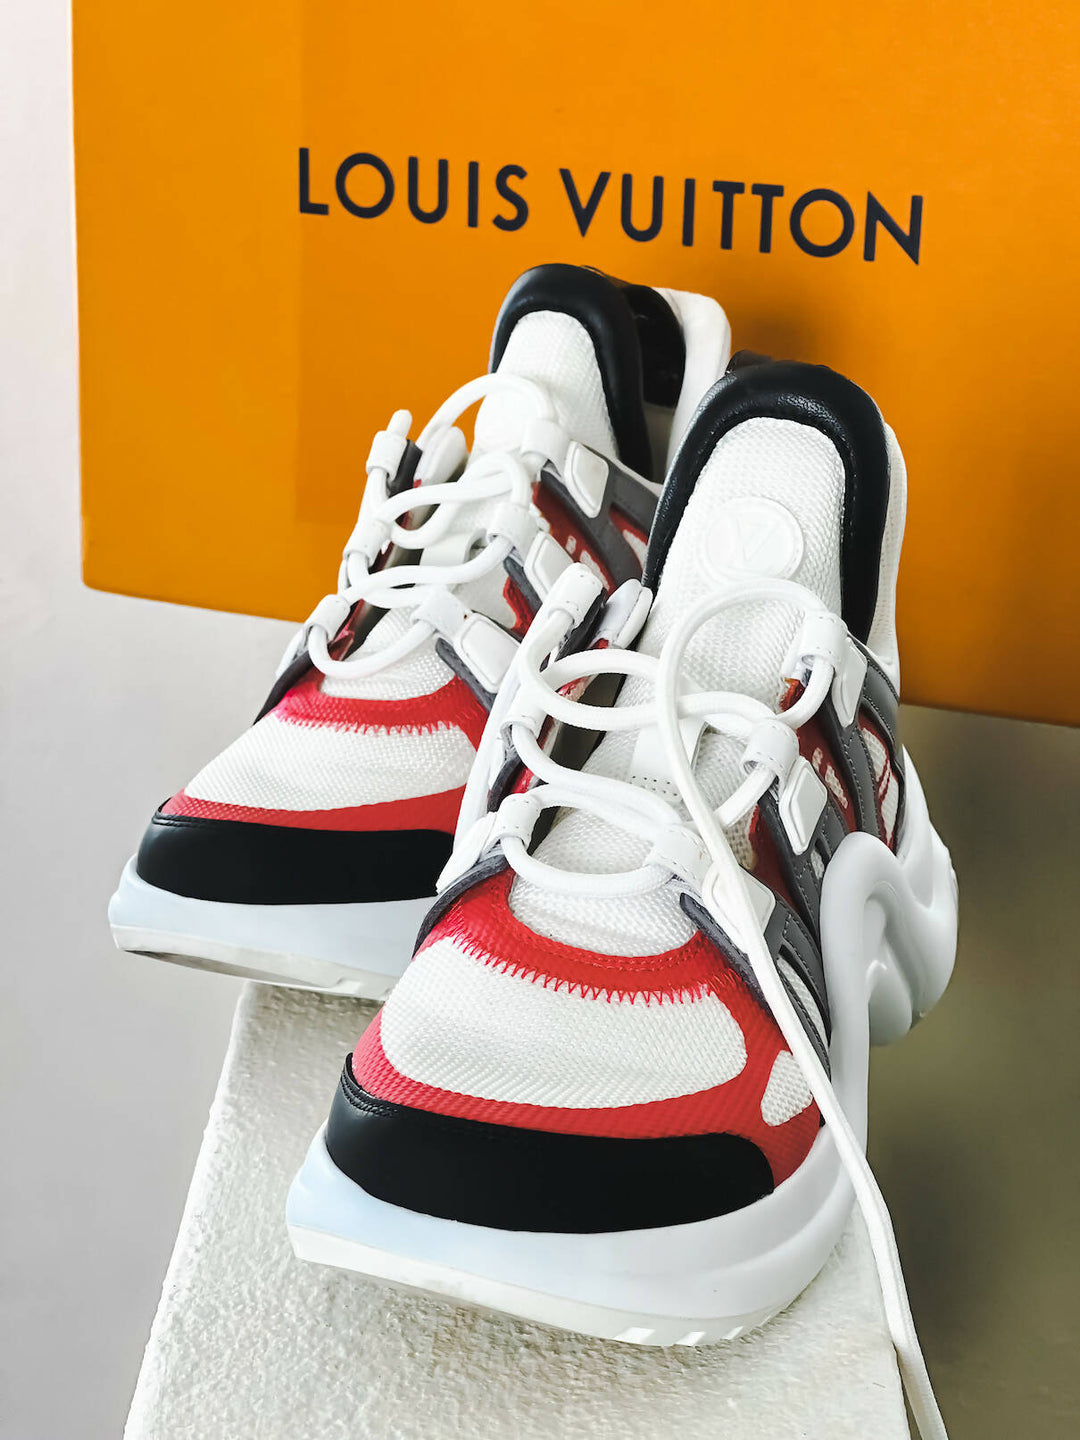 Louis Vuitton Archlight Trainer Rose Clair (Women's)  Louis vuitton shoes  sneakers, Louis vuitton shoes, Louis vuitton sneakers